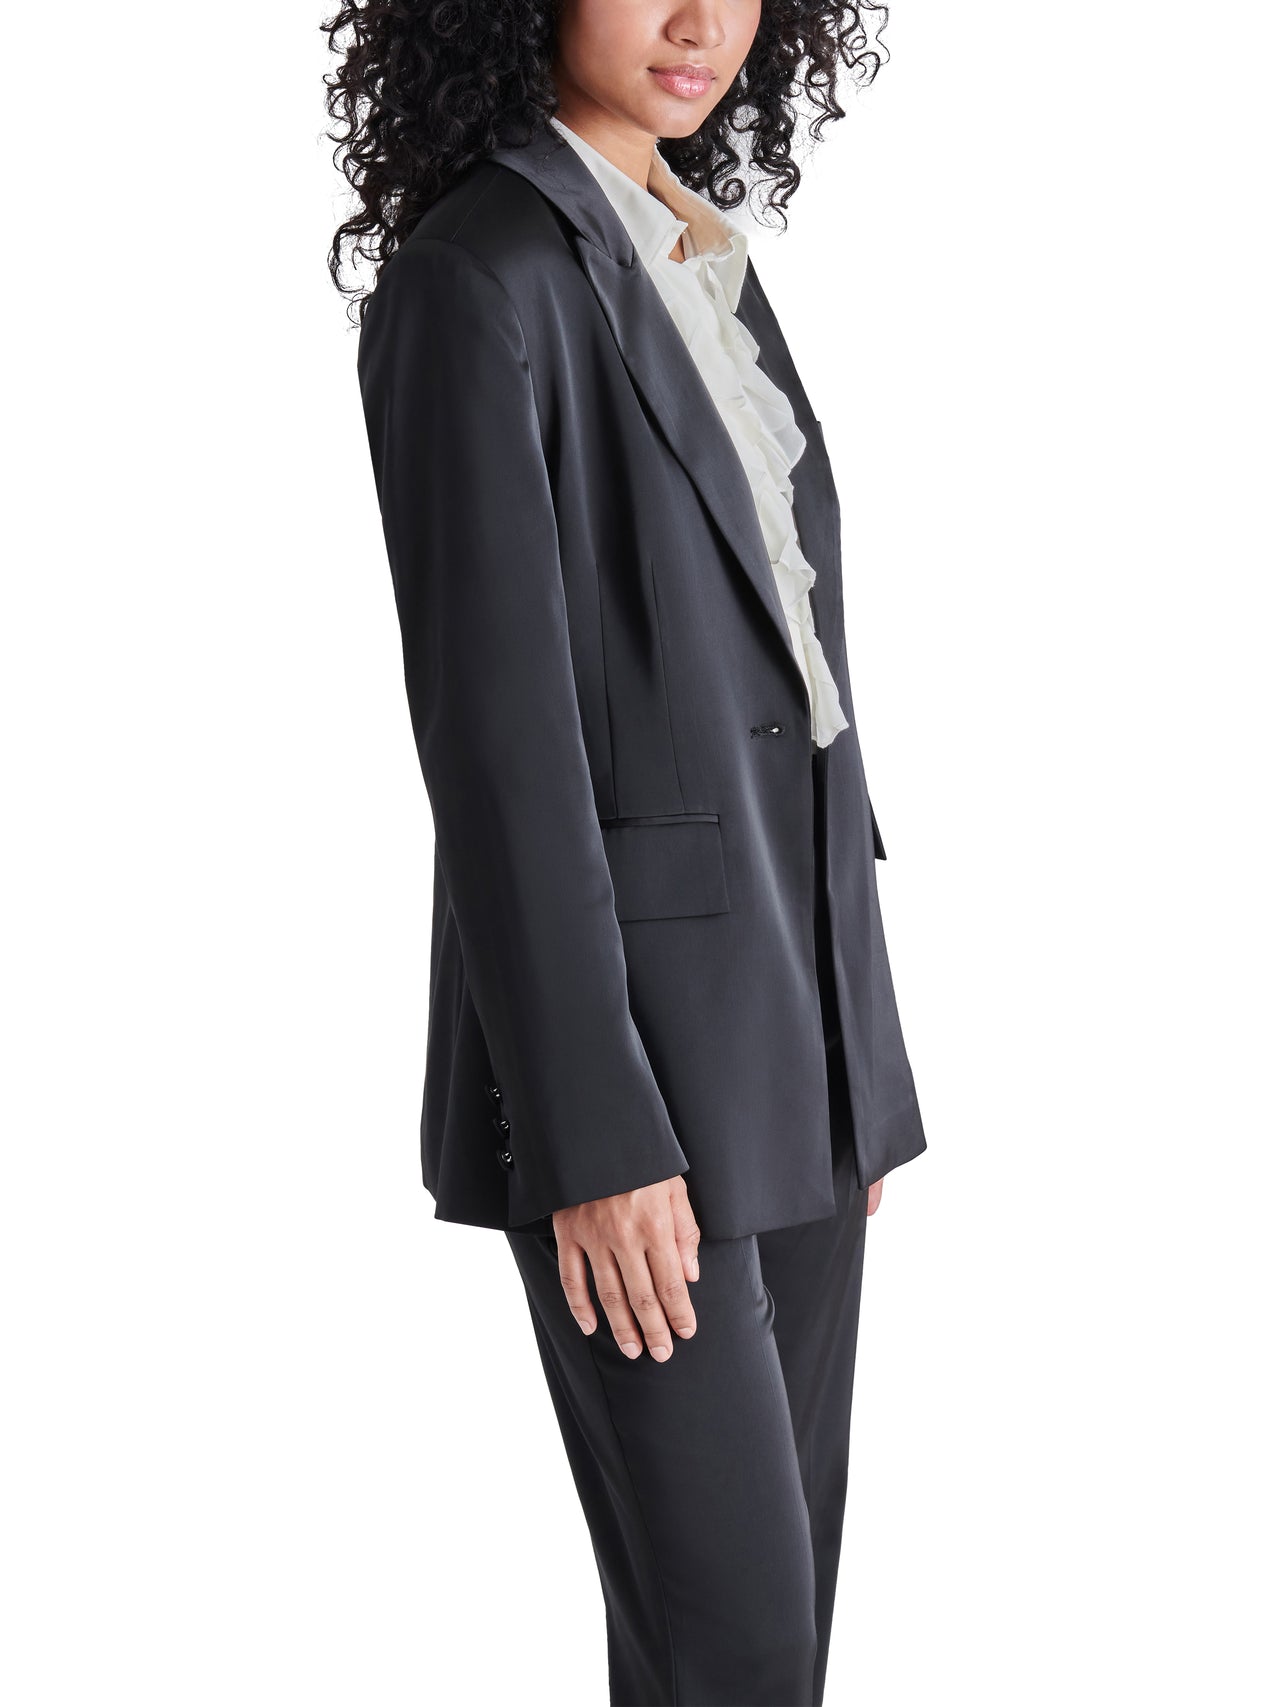 Misha Black Satin Blazer, Jacket by Steve Madden | LIT Boutique